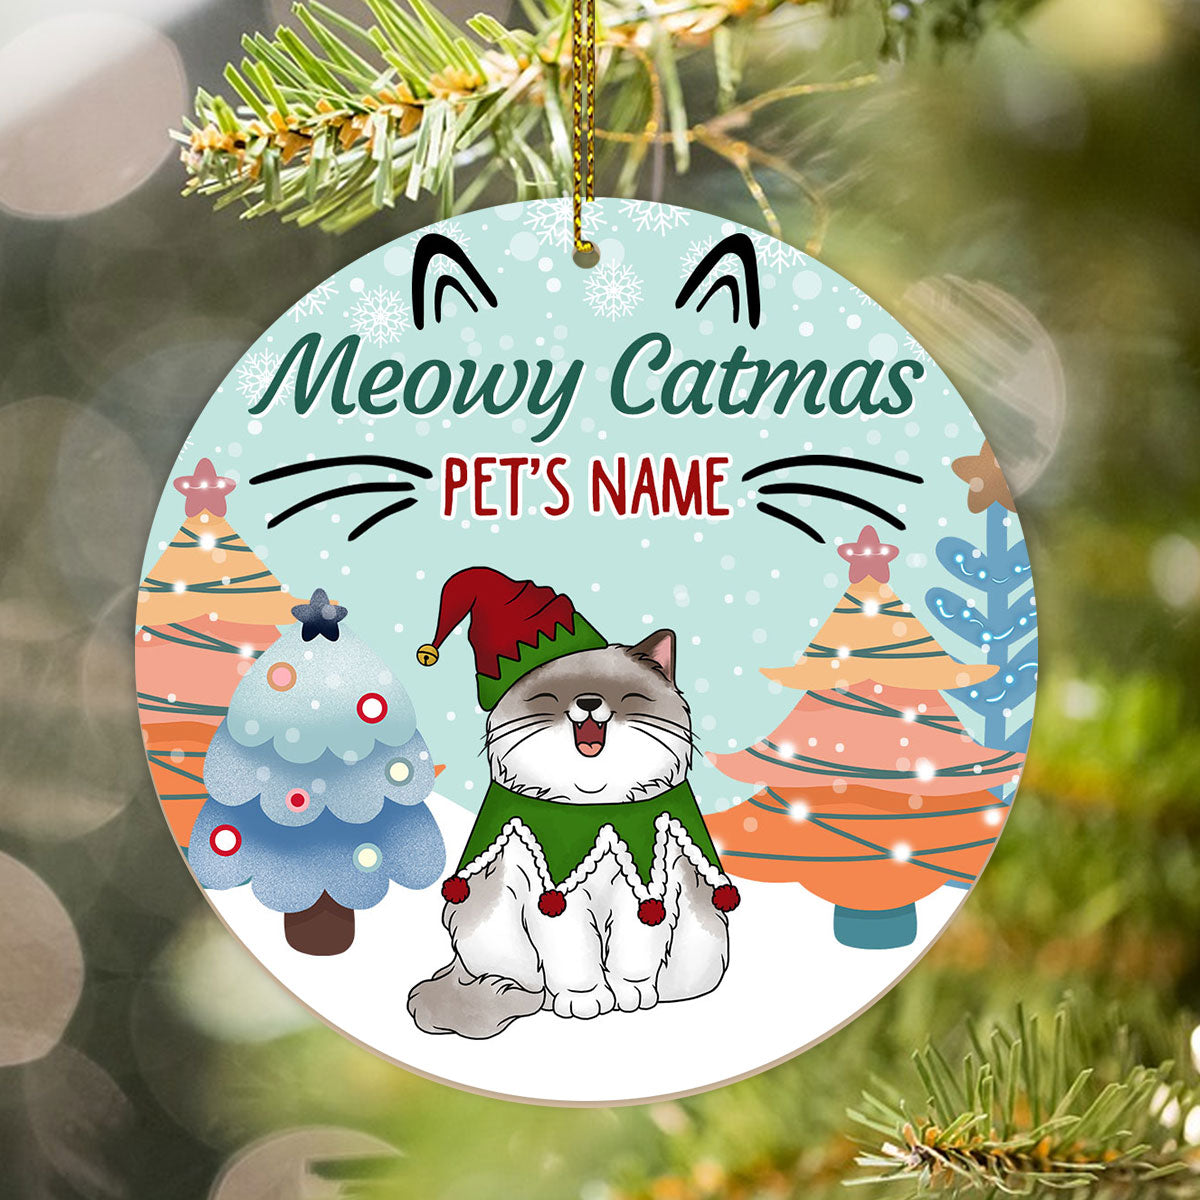 Meowy Catmas Personalized Custom Cat Ornament, Custom Cat Breeds, Christmas Premium Ceramic Ornaments Sets